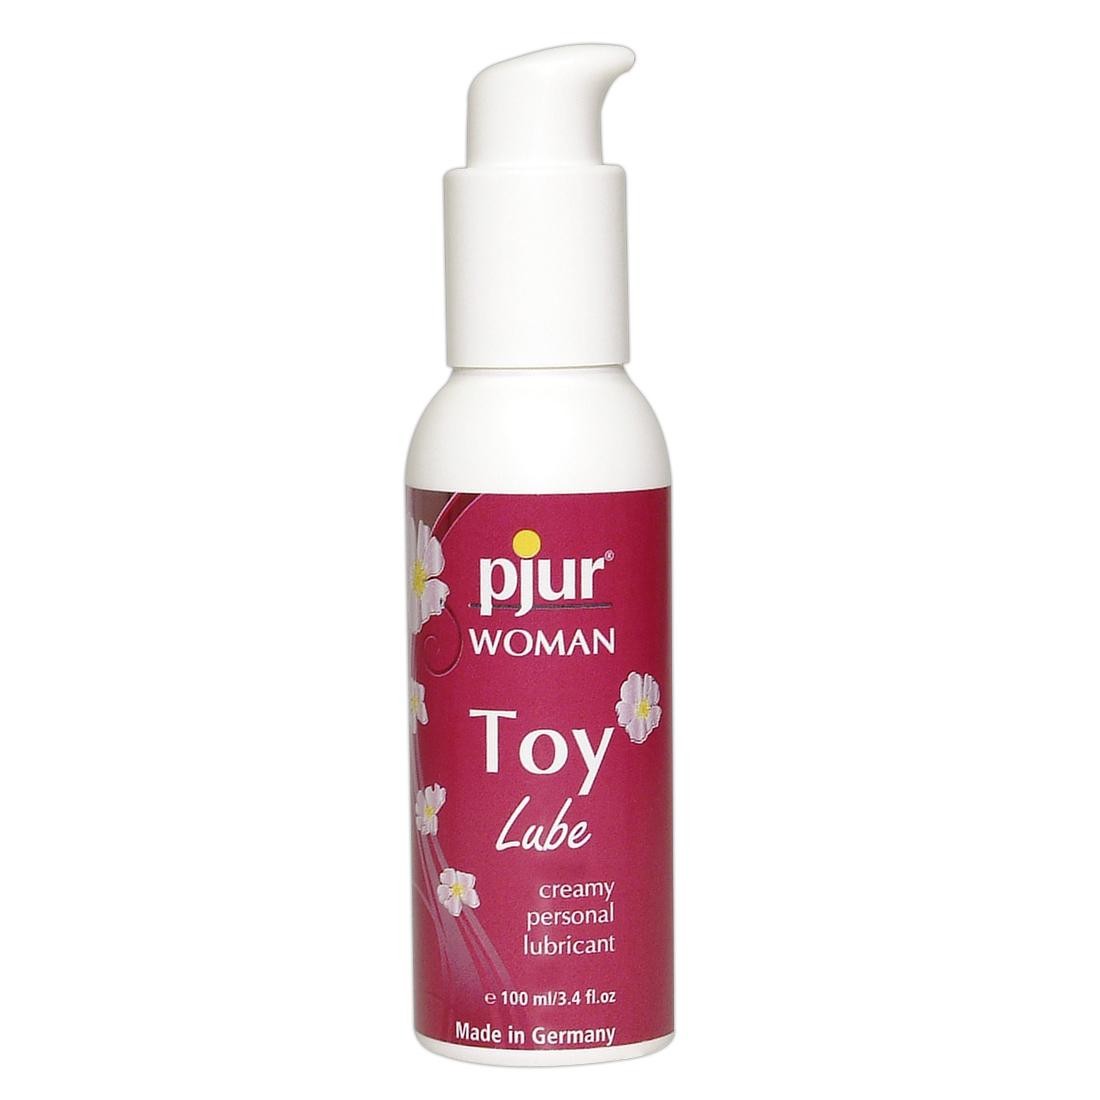  pjur  -  Woman  Toy  Lube  -  Gleitmittel  100  ml 